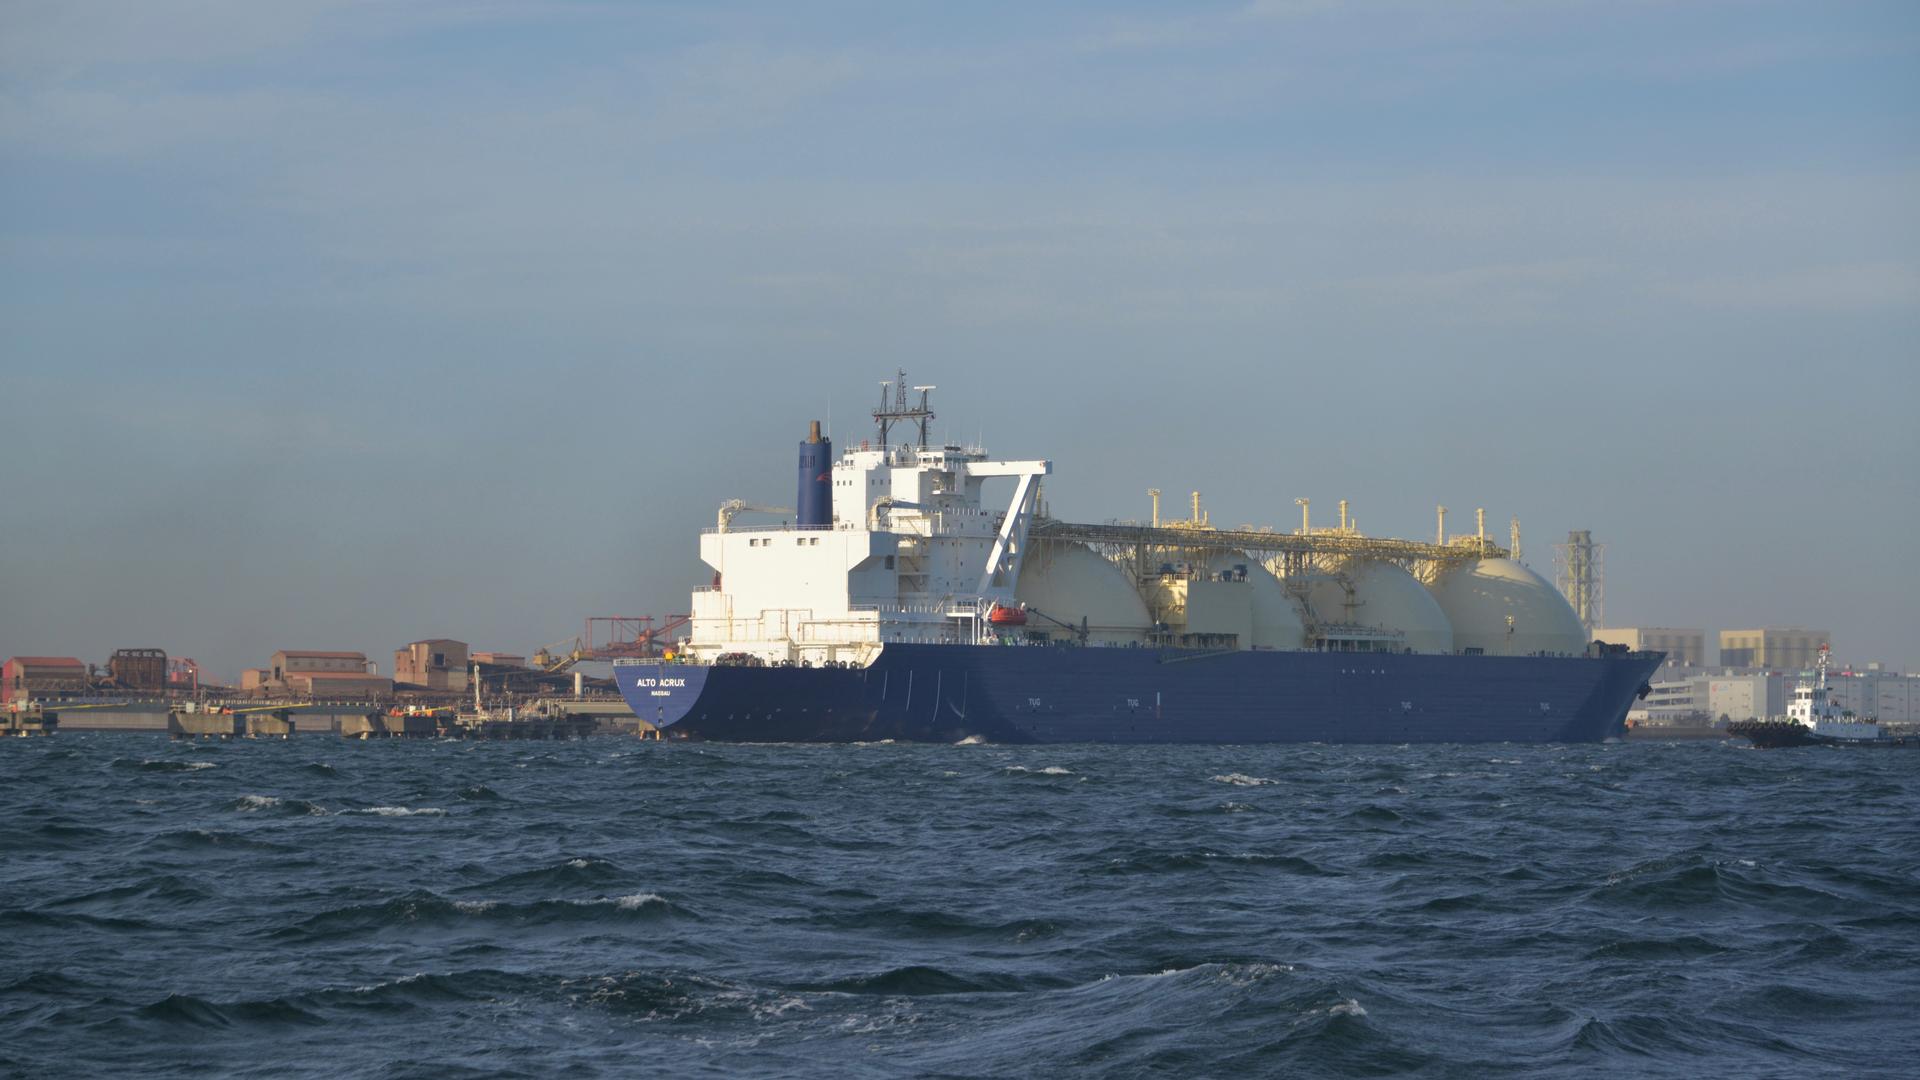 An LNG tanker unloads its cargo at the Port of Yokohama, Japan.